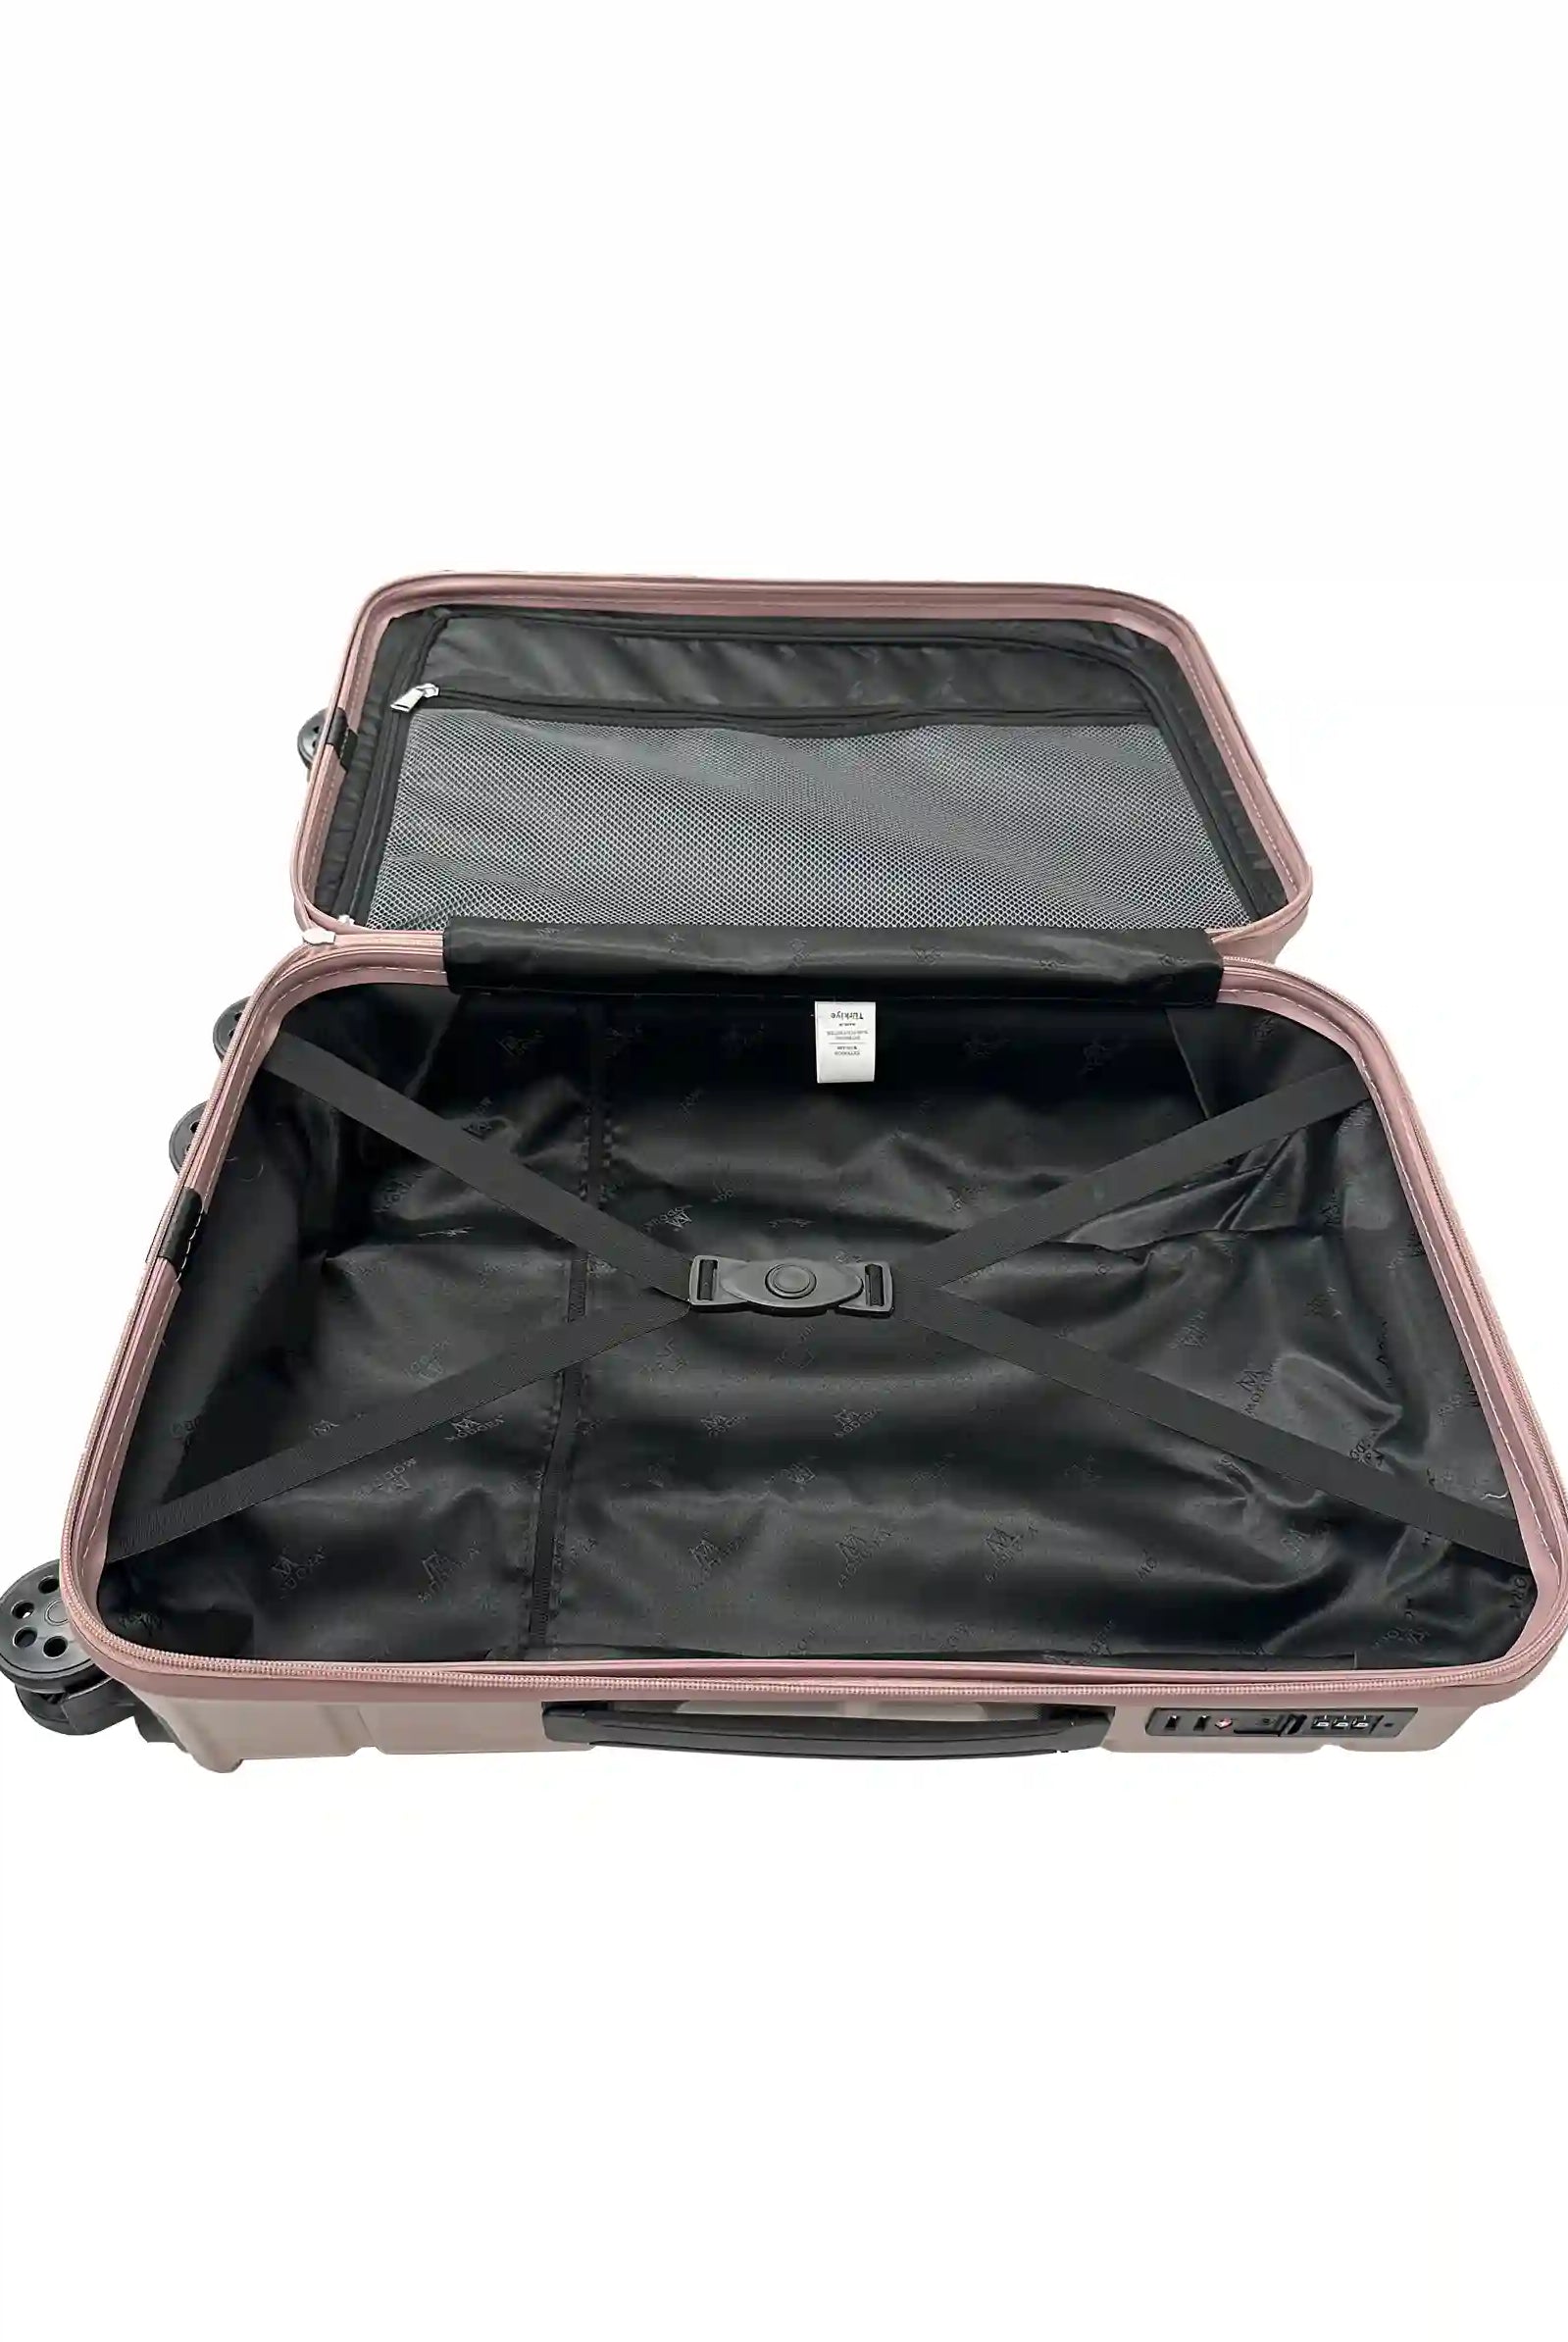 Powder medium suitcase uk